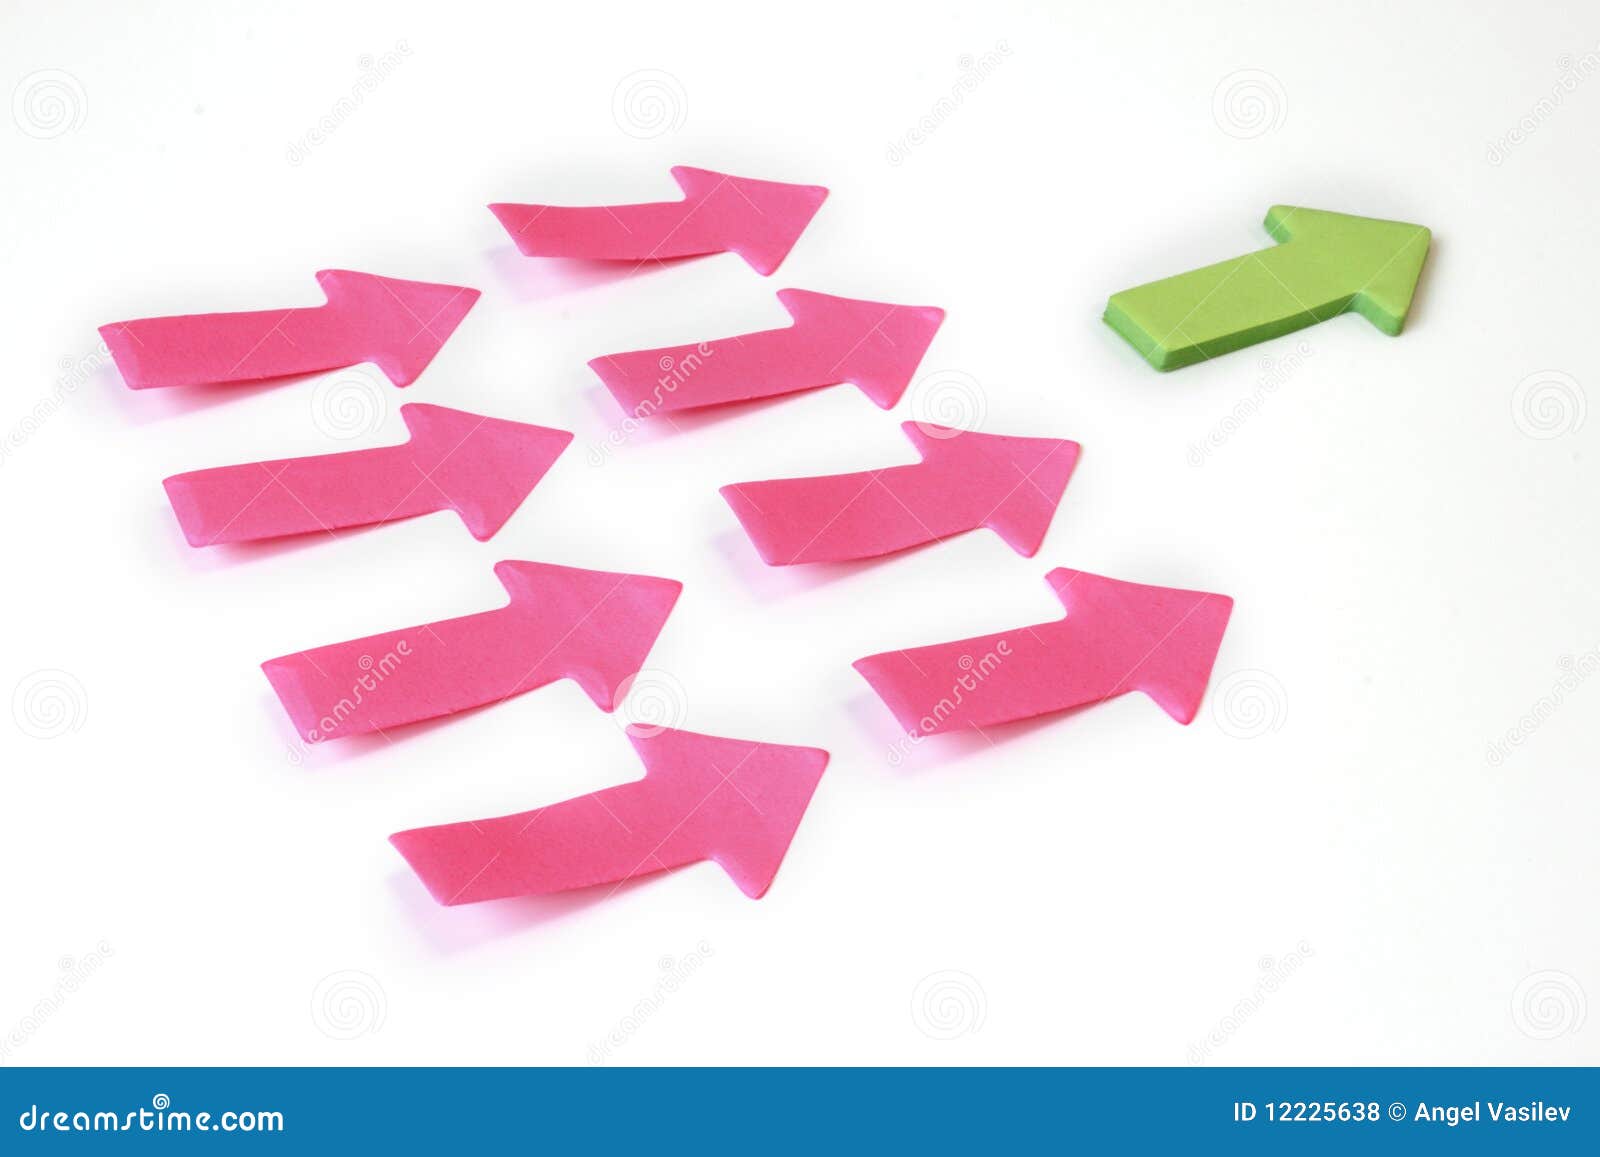 leader paper arrows bussiness concept.